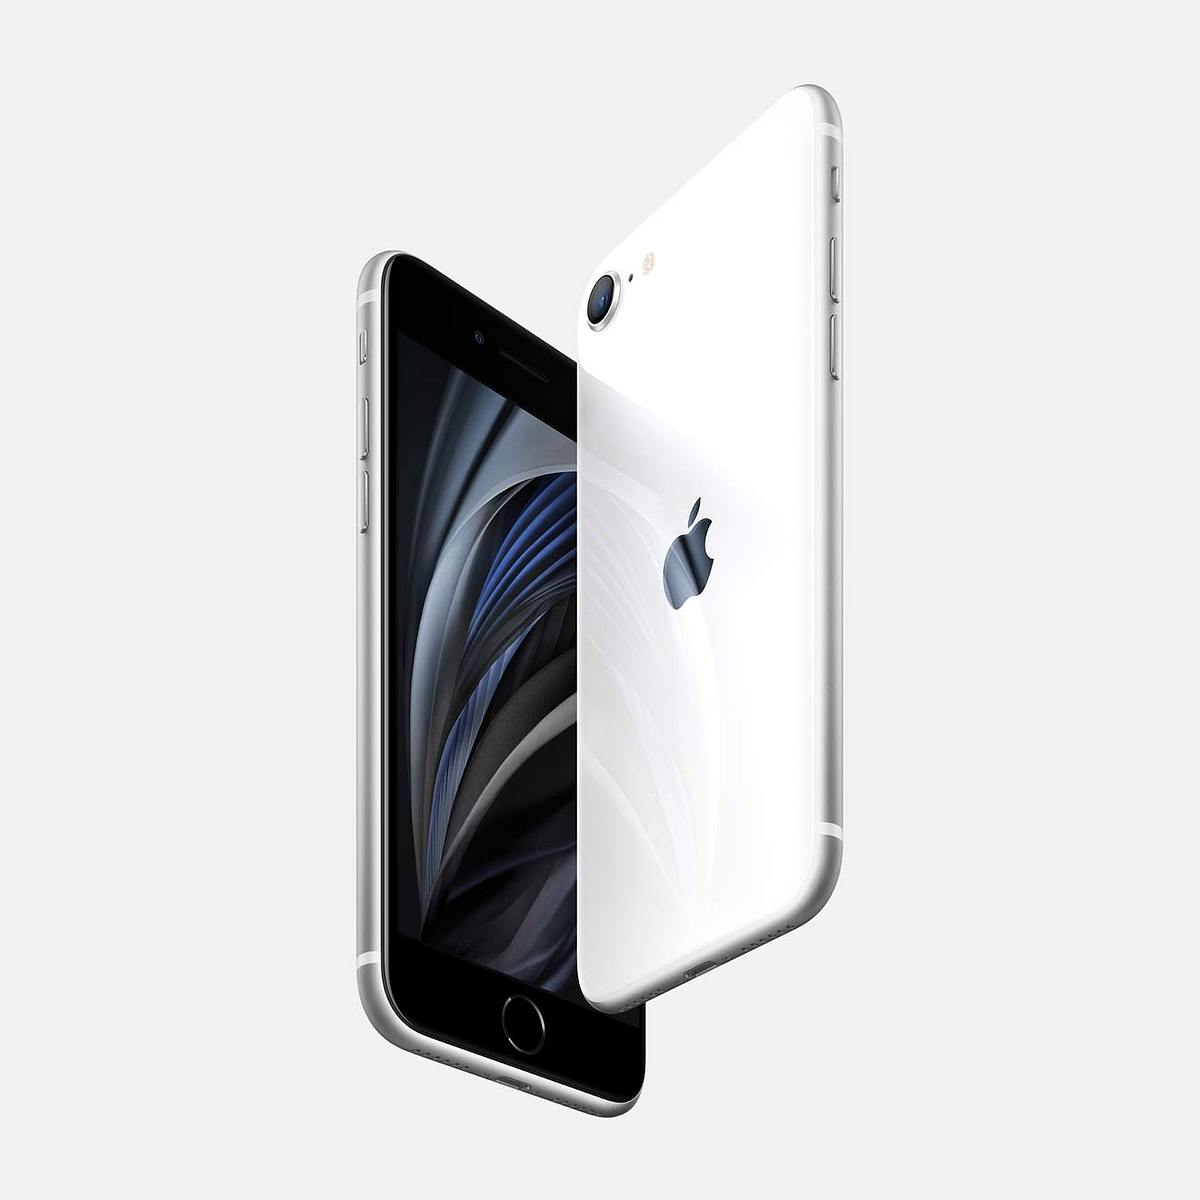 iPhone SE 2: Alle Infos zu Apples neuem Handy